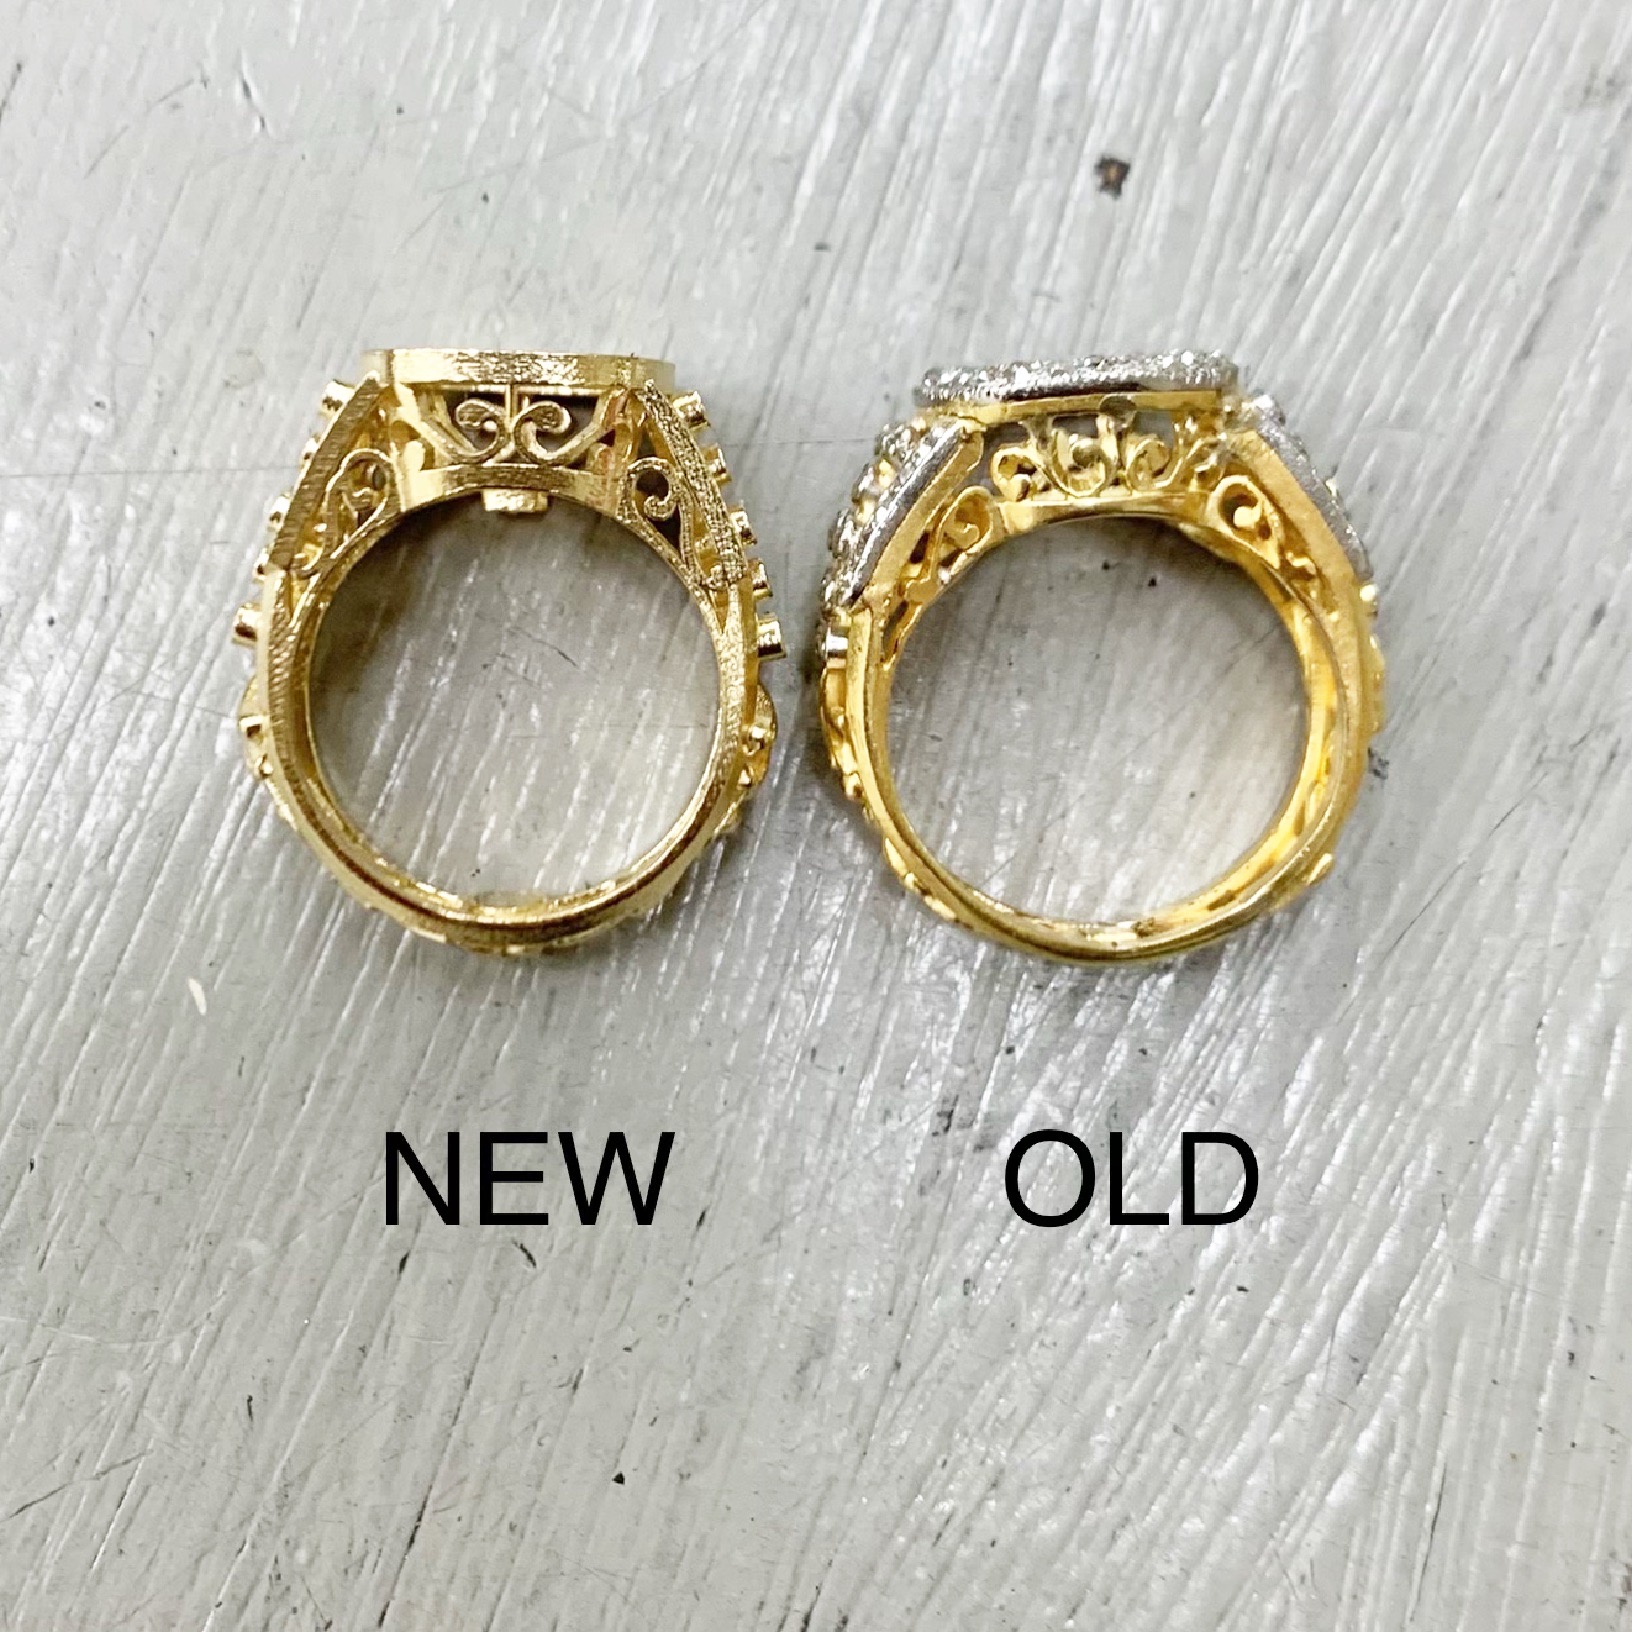 Antique Sapphire Ring Restoration